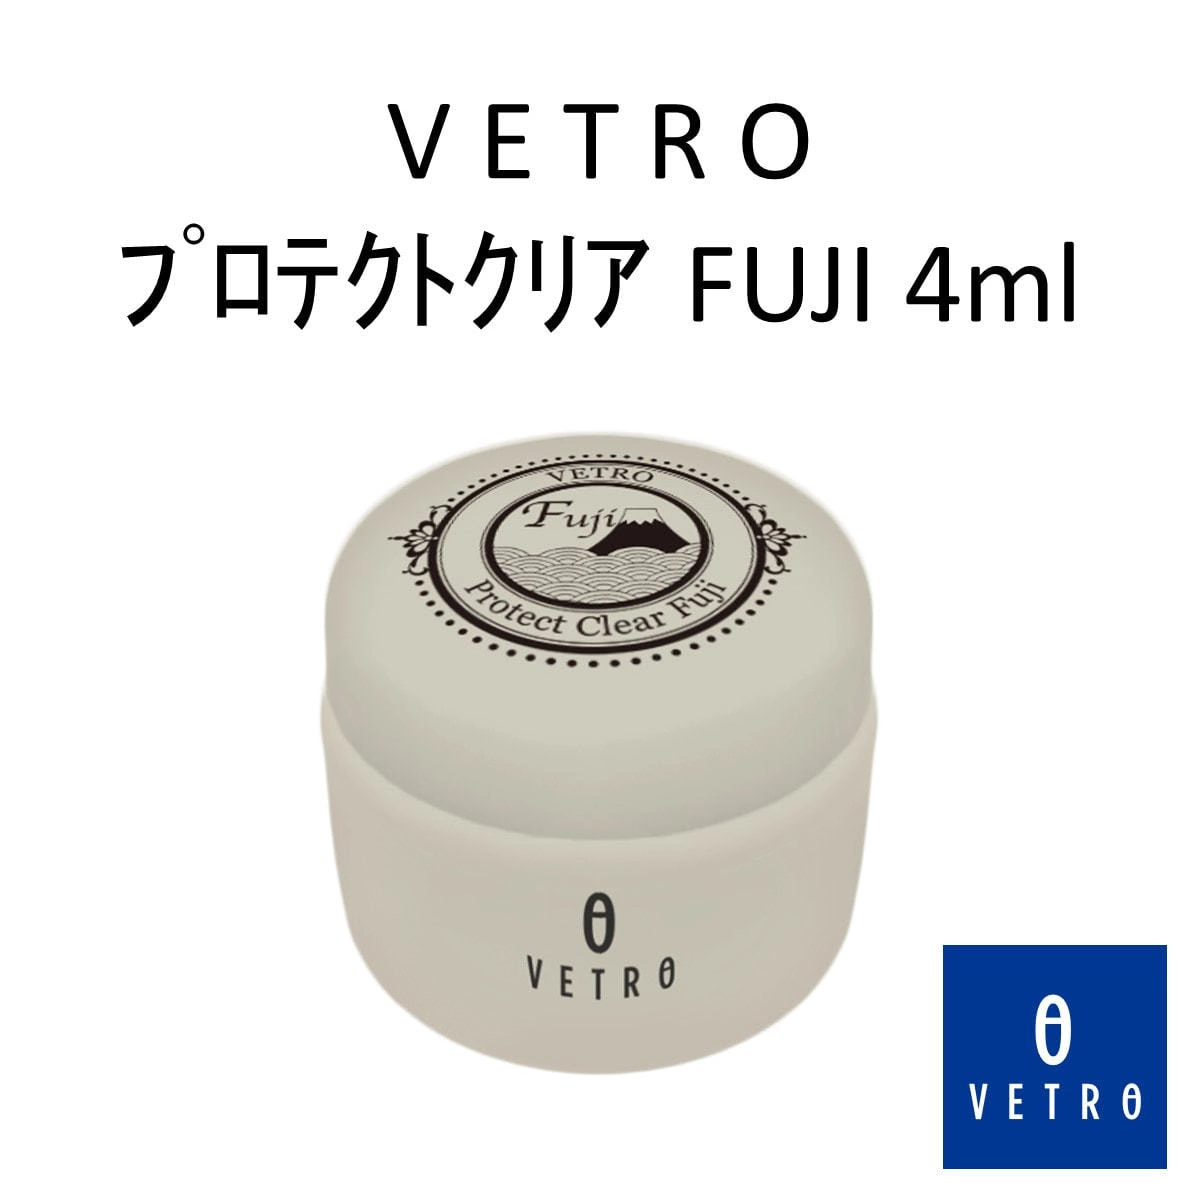 VETRO（ベトロ） プロテクトクリア FUJI 4ml (BF-0)